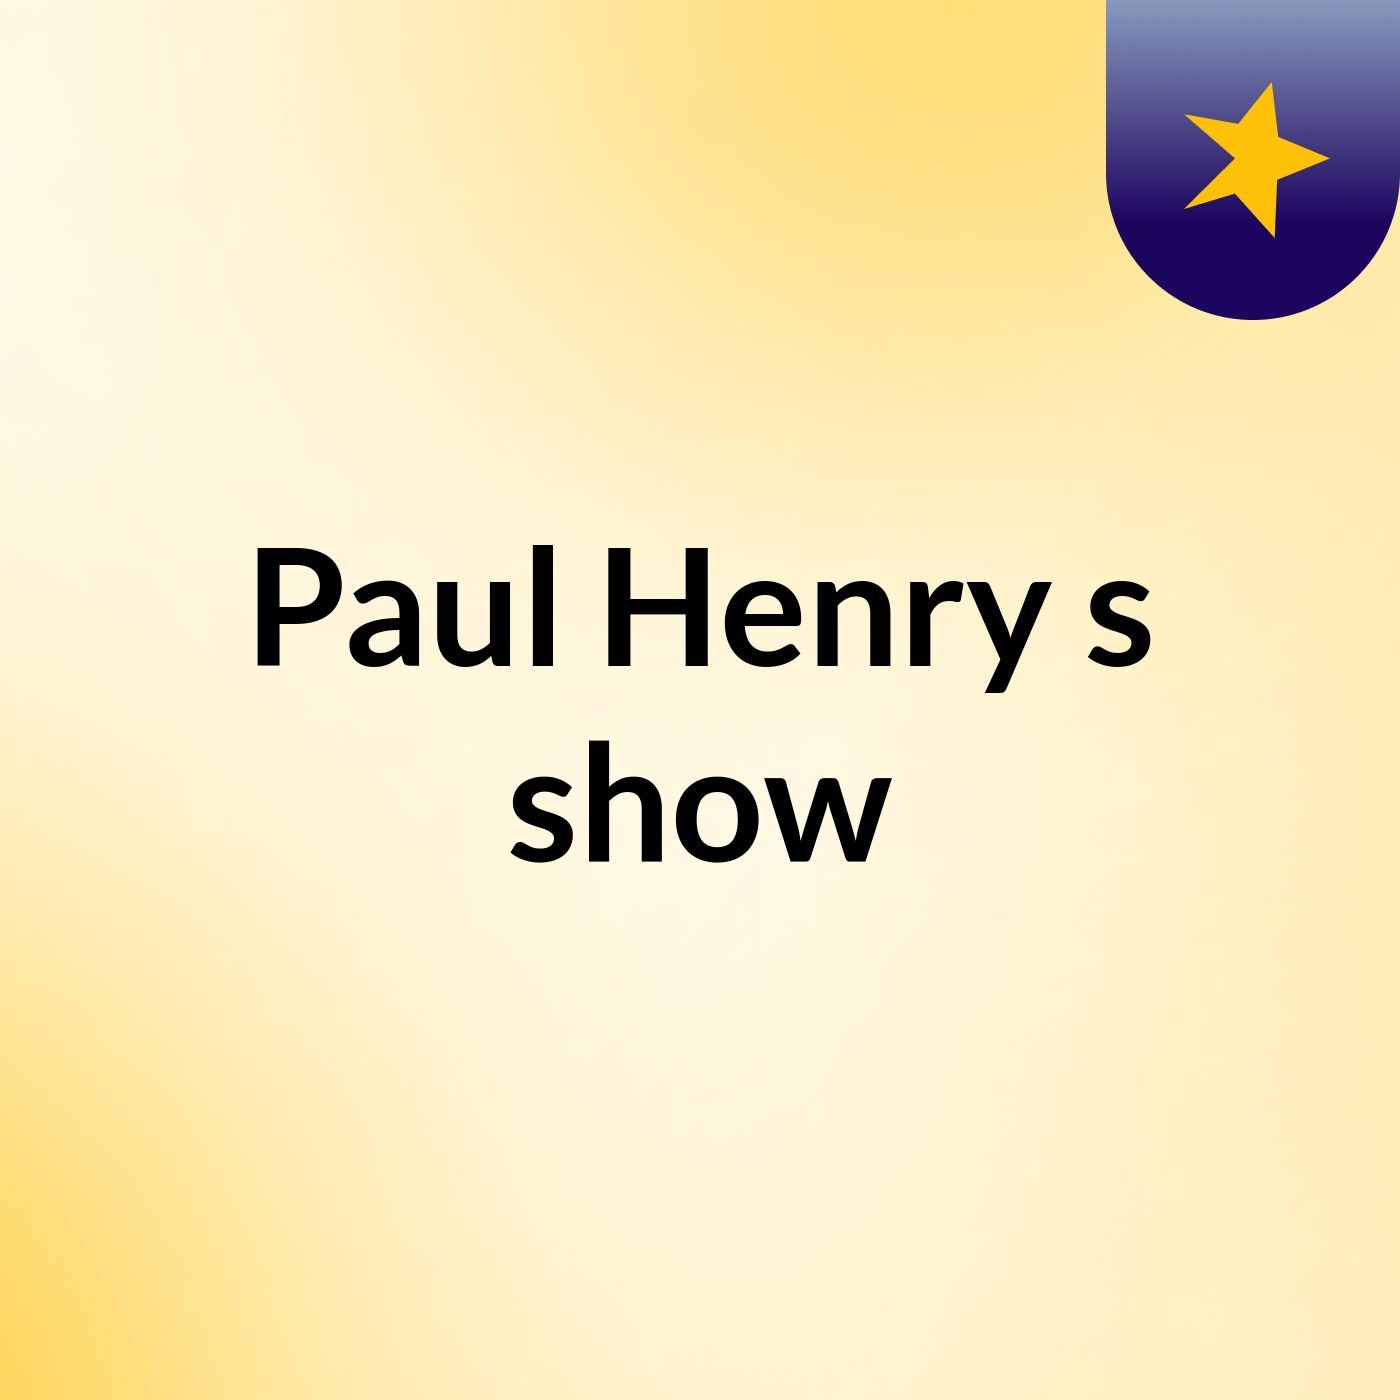 Paul Henry's show